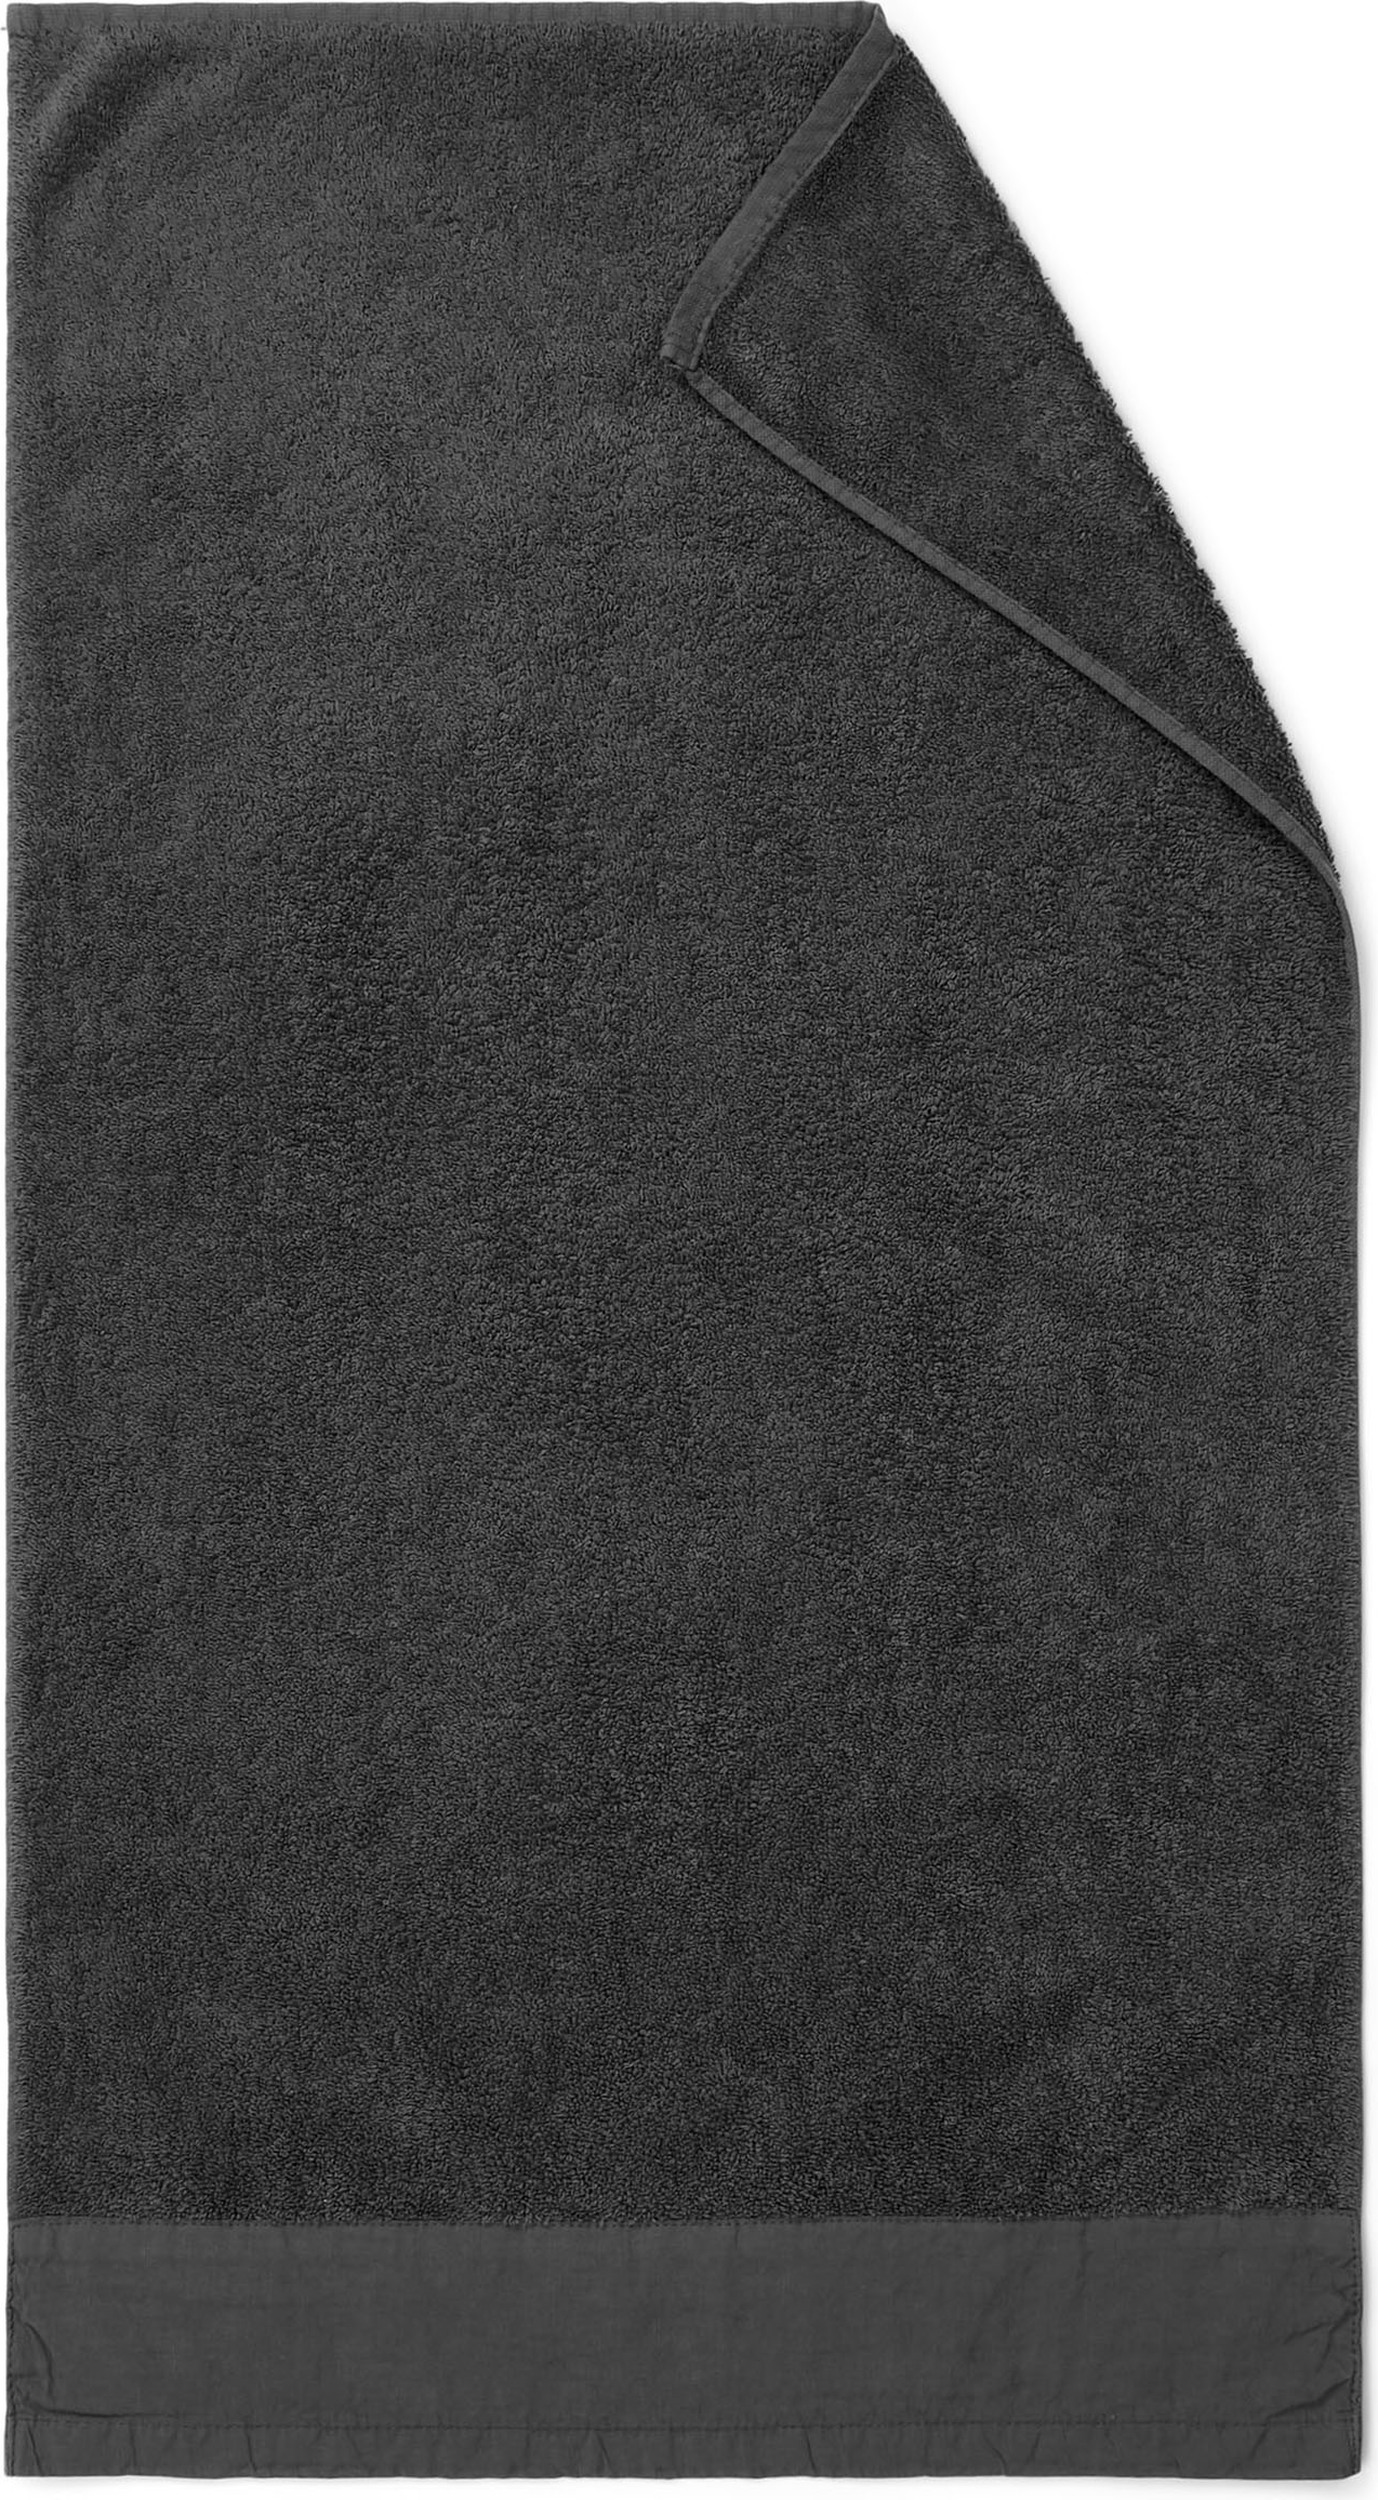 Linan Towel 50 x 100 cm - Marc O'Polo 739009-202-001